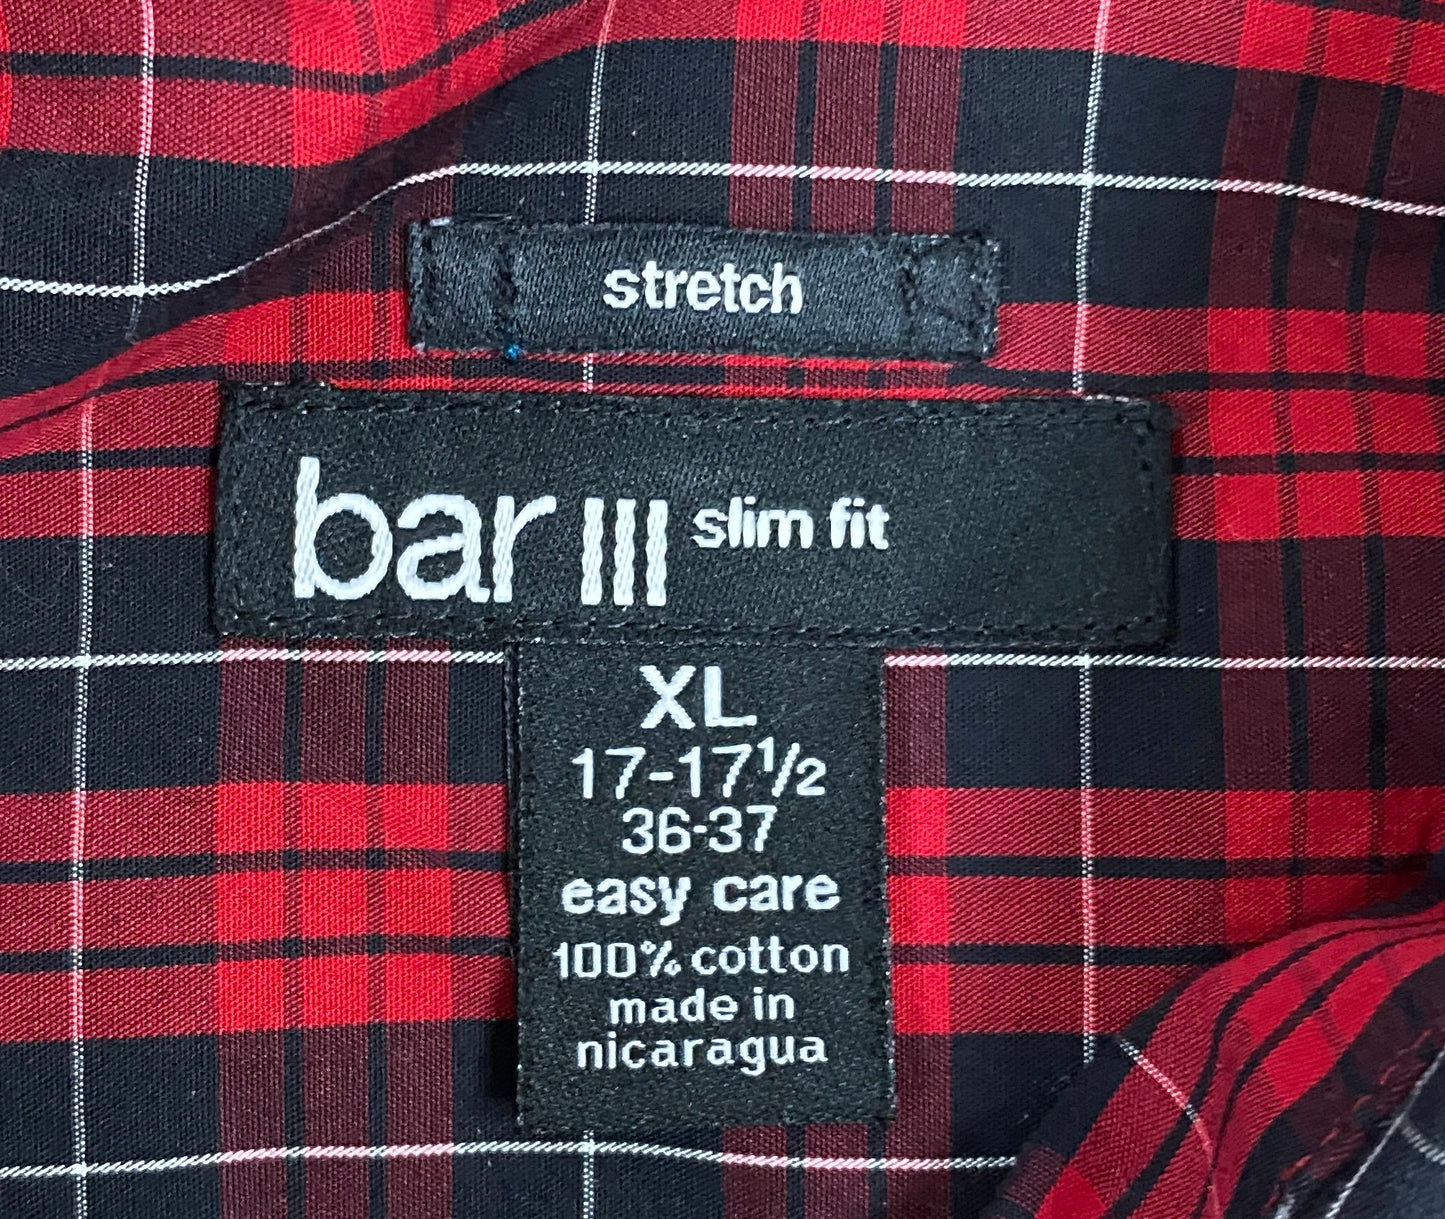 Barr III Men's Shirt Red Black White  Size XL  SKU 000371-12